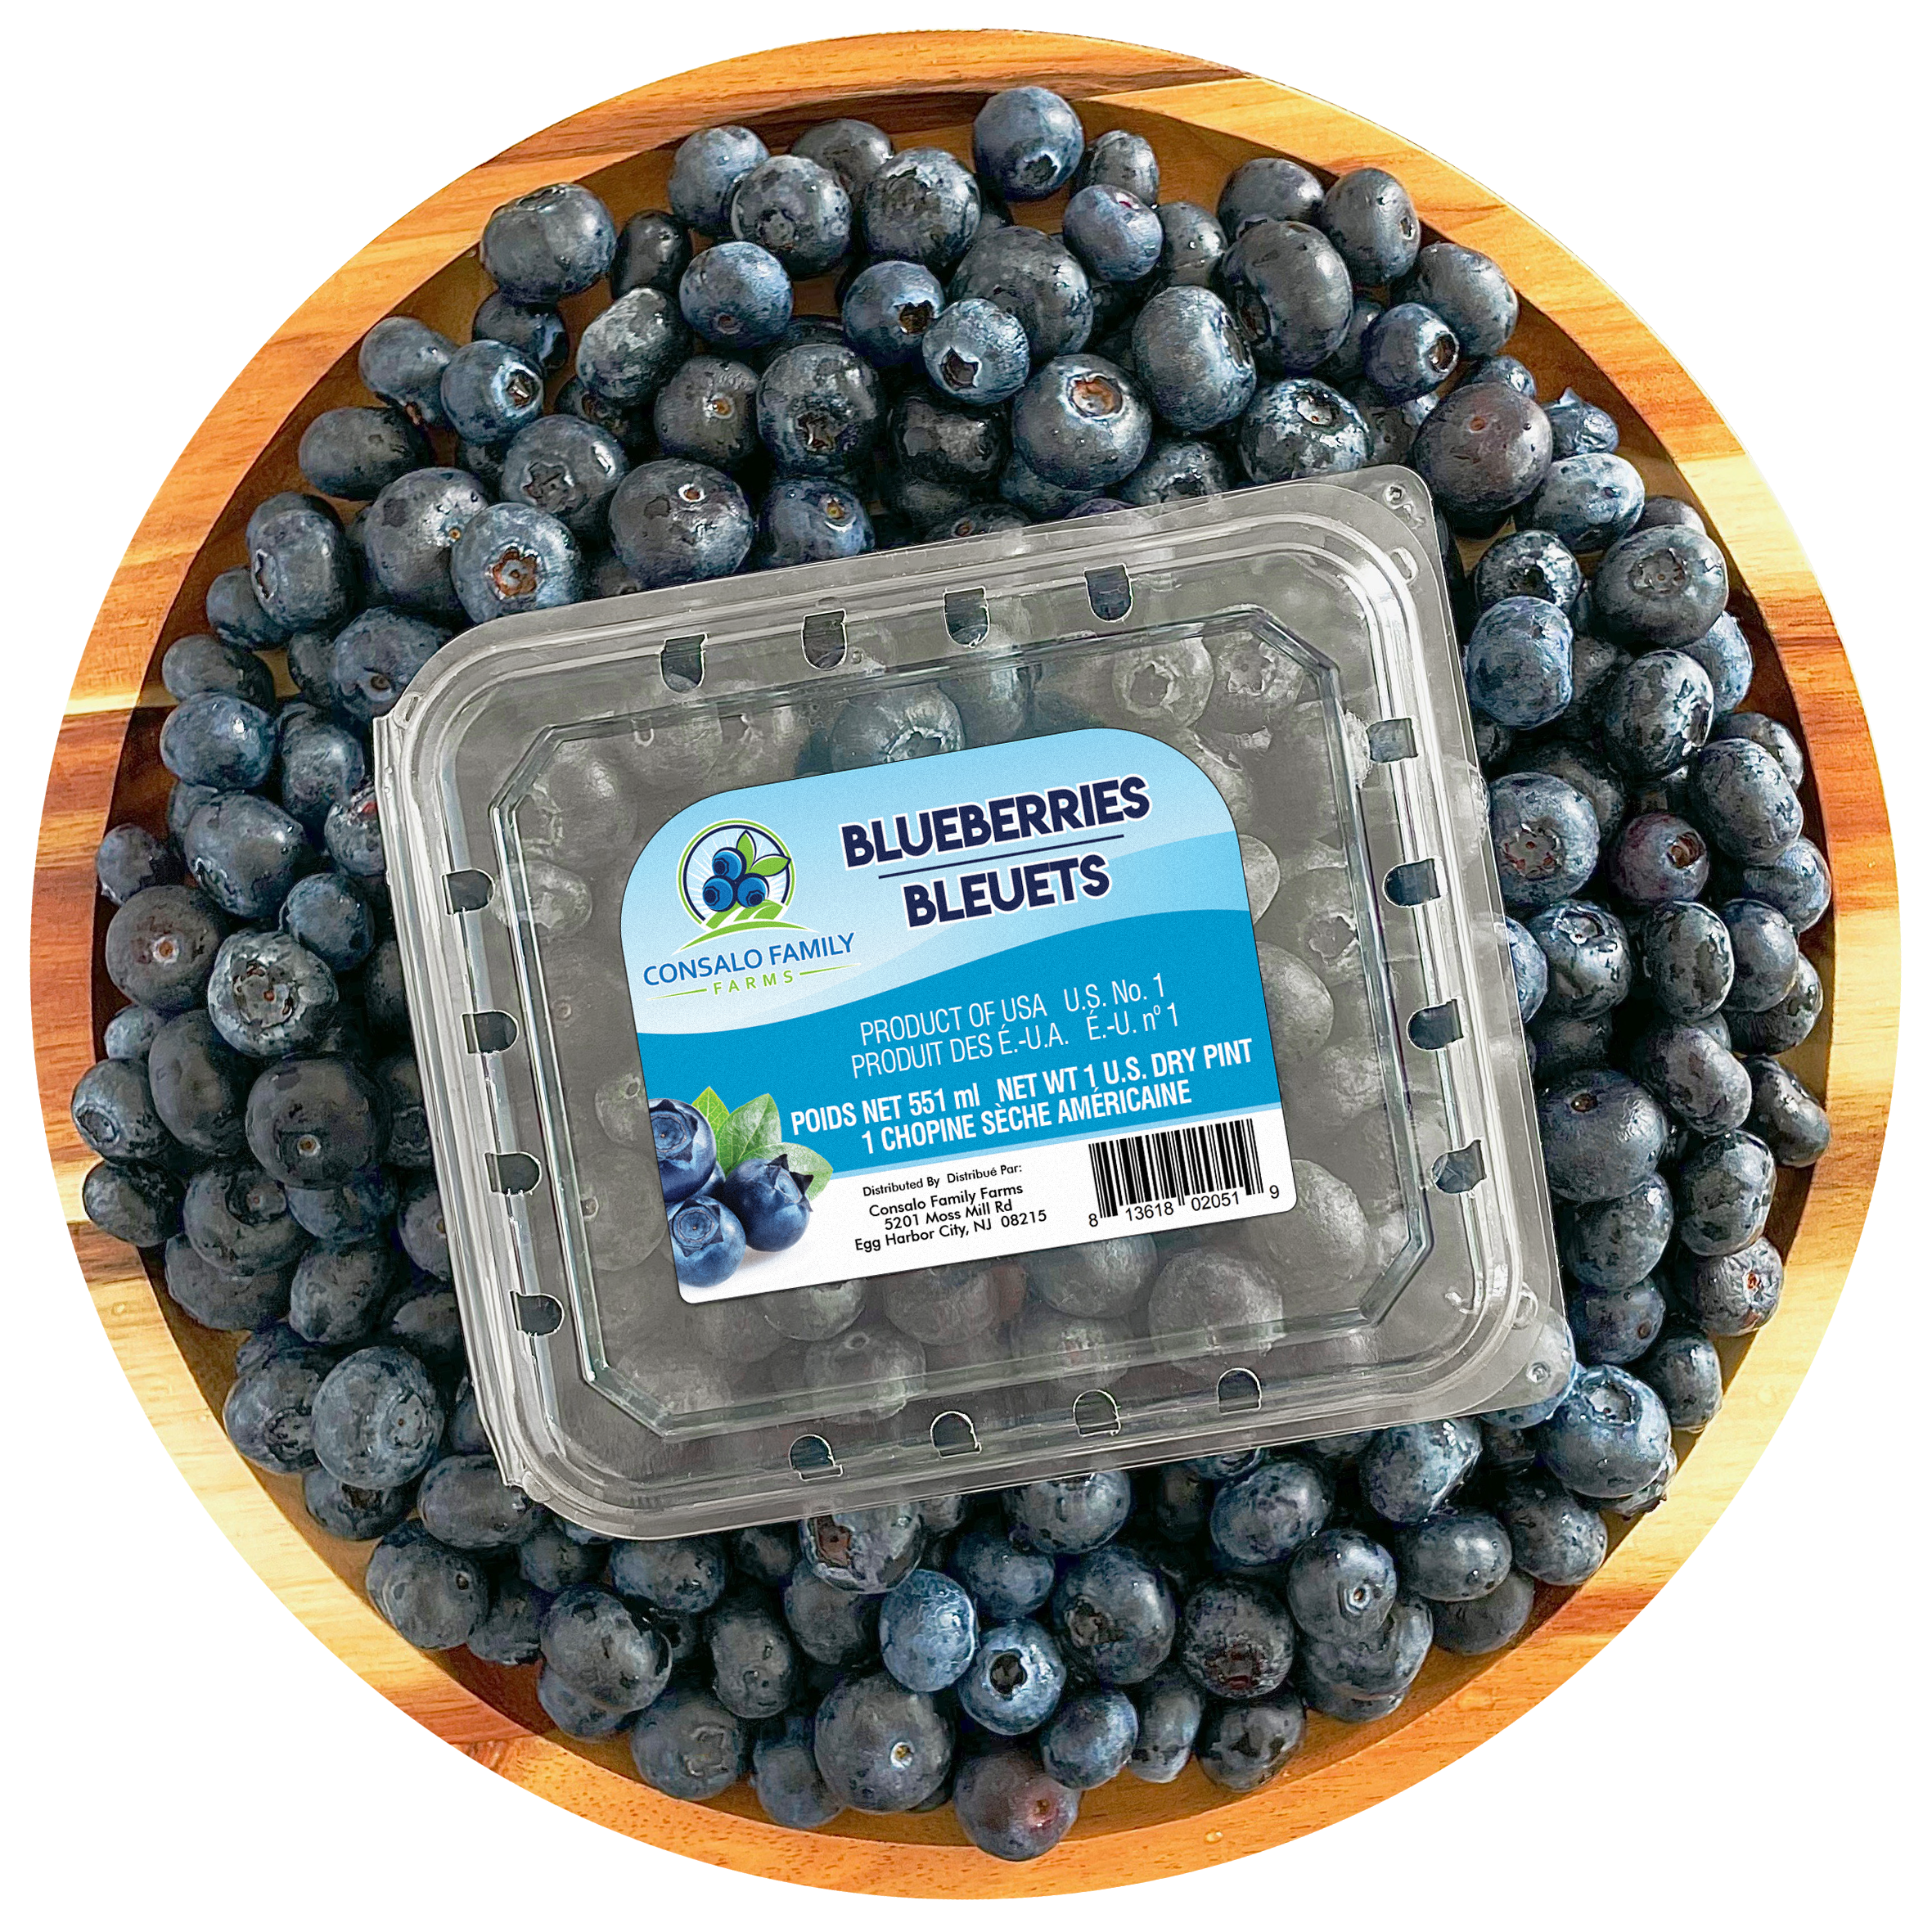 Lloyd's Blueberry Farm - Inglenook & Co., LLC